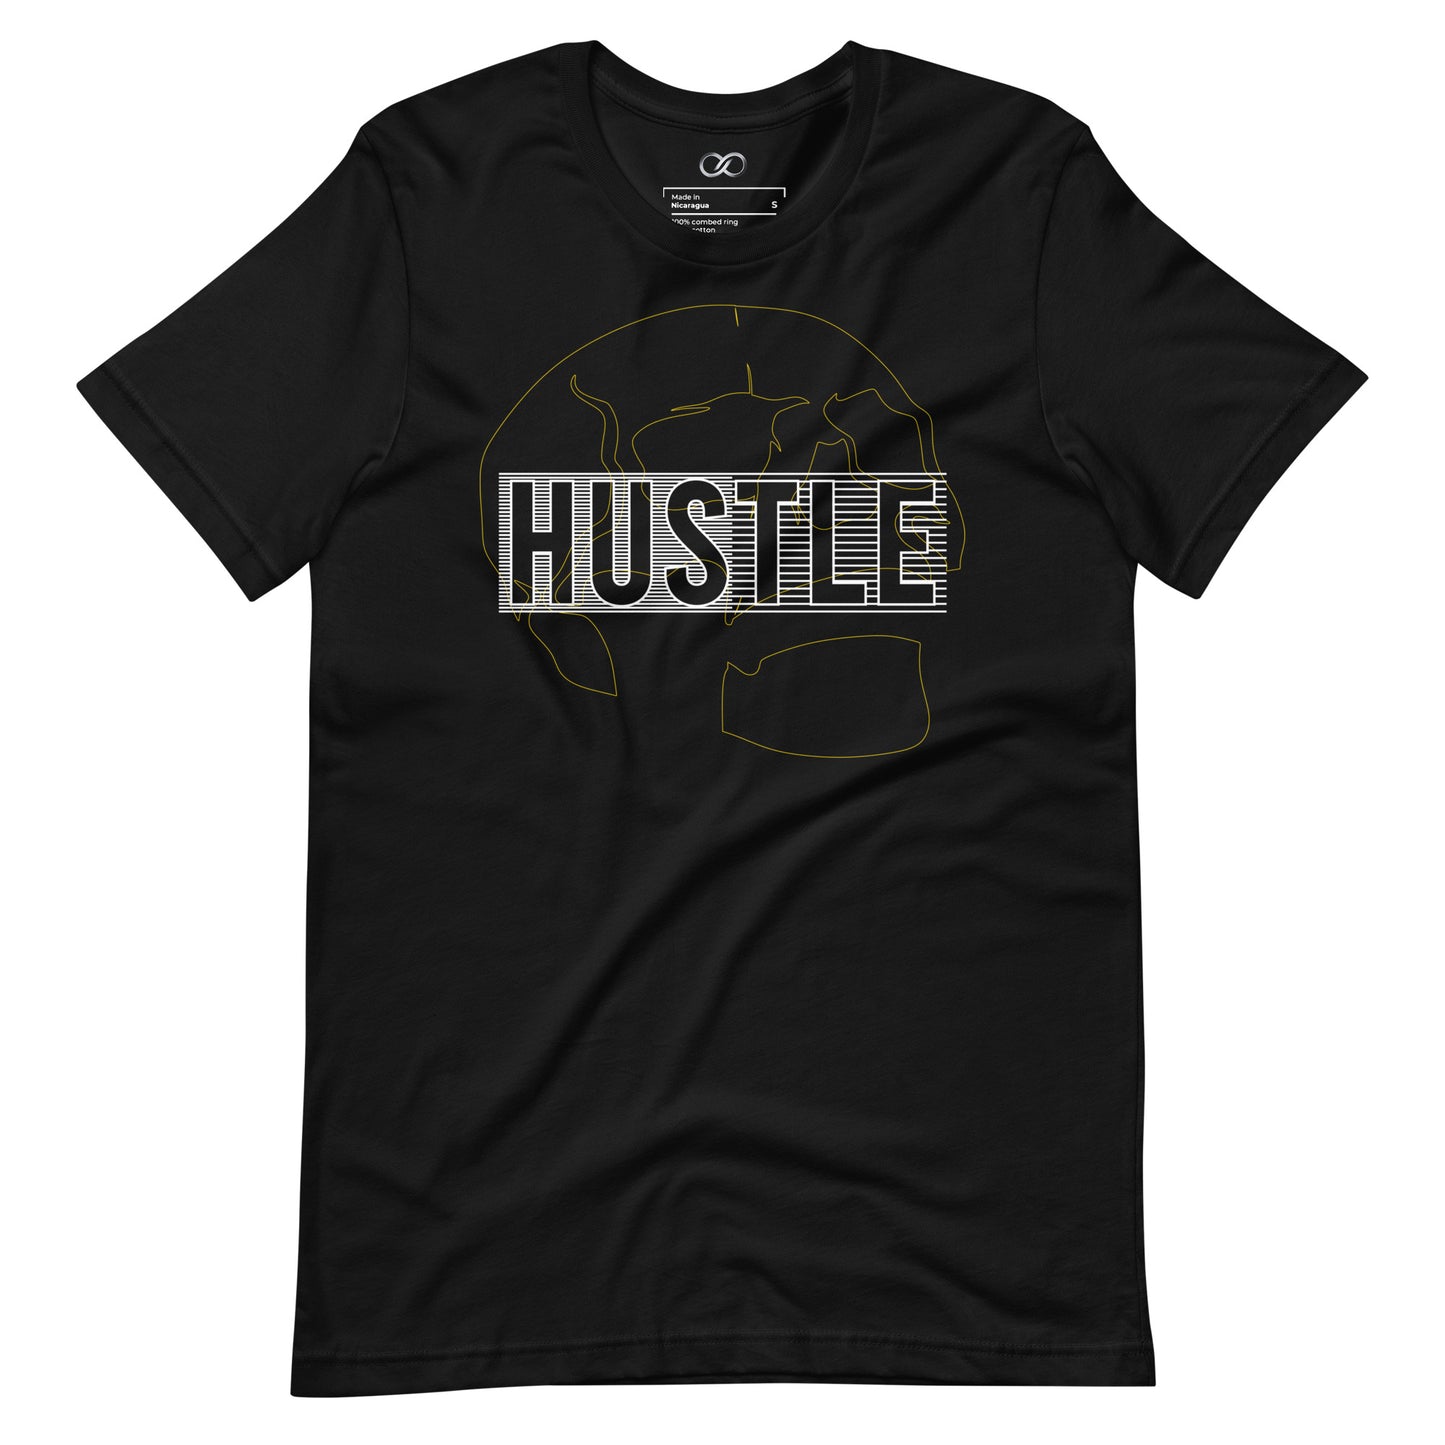 Urban Hustle T-Shirt - Motivational Streetwear Tee